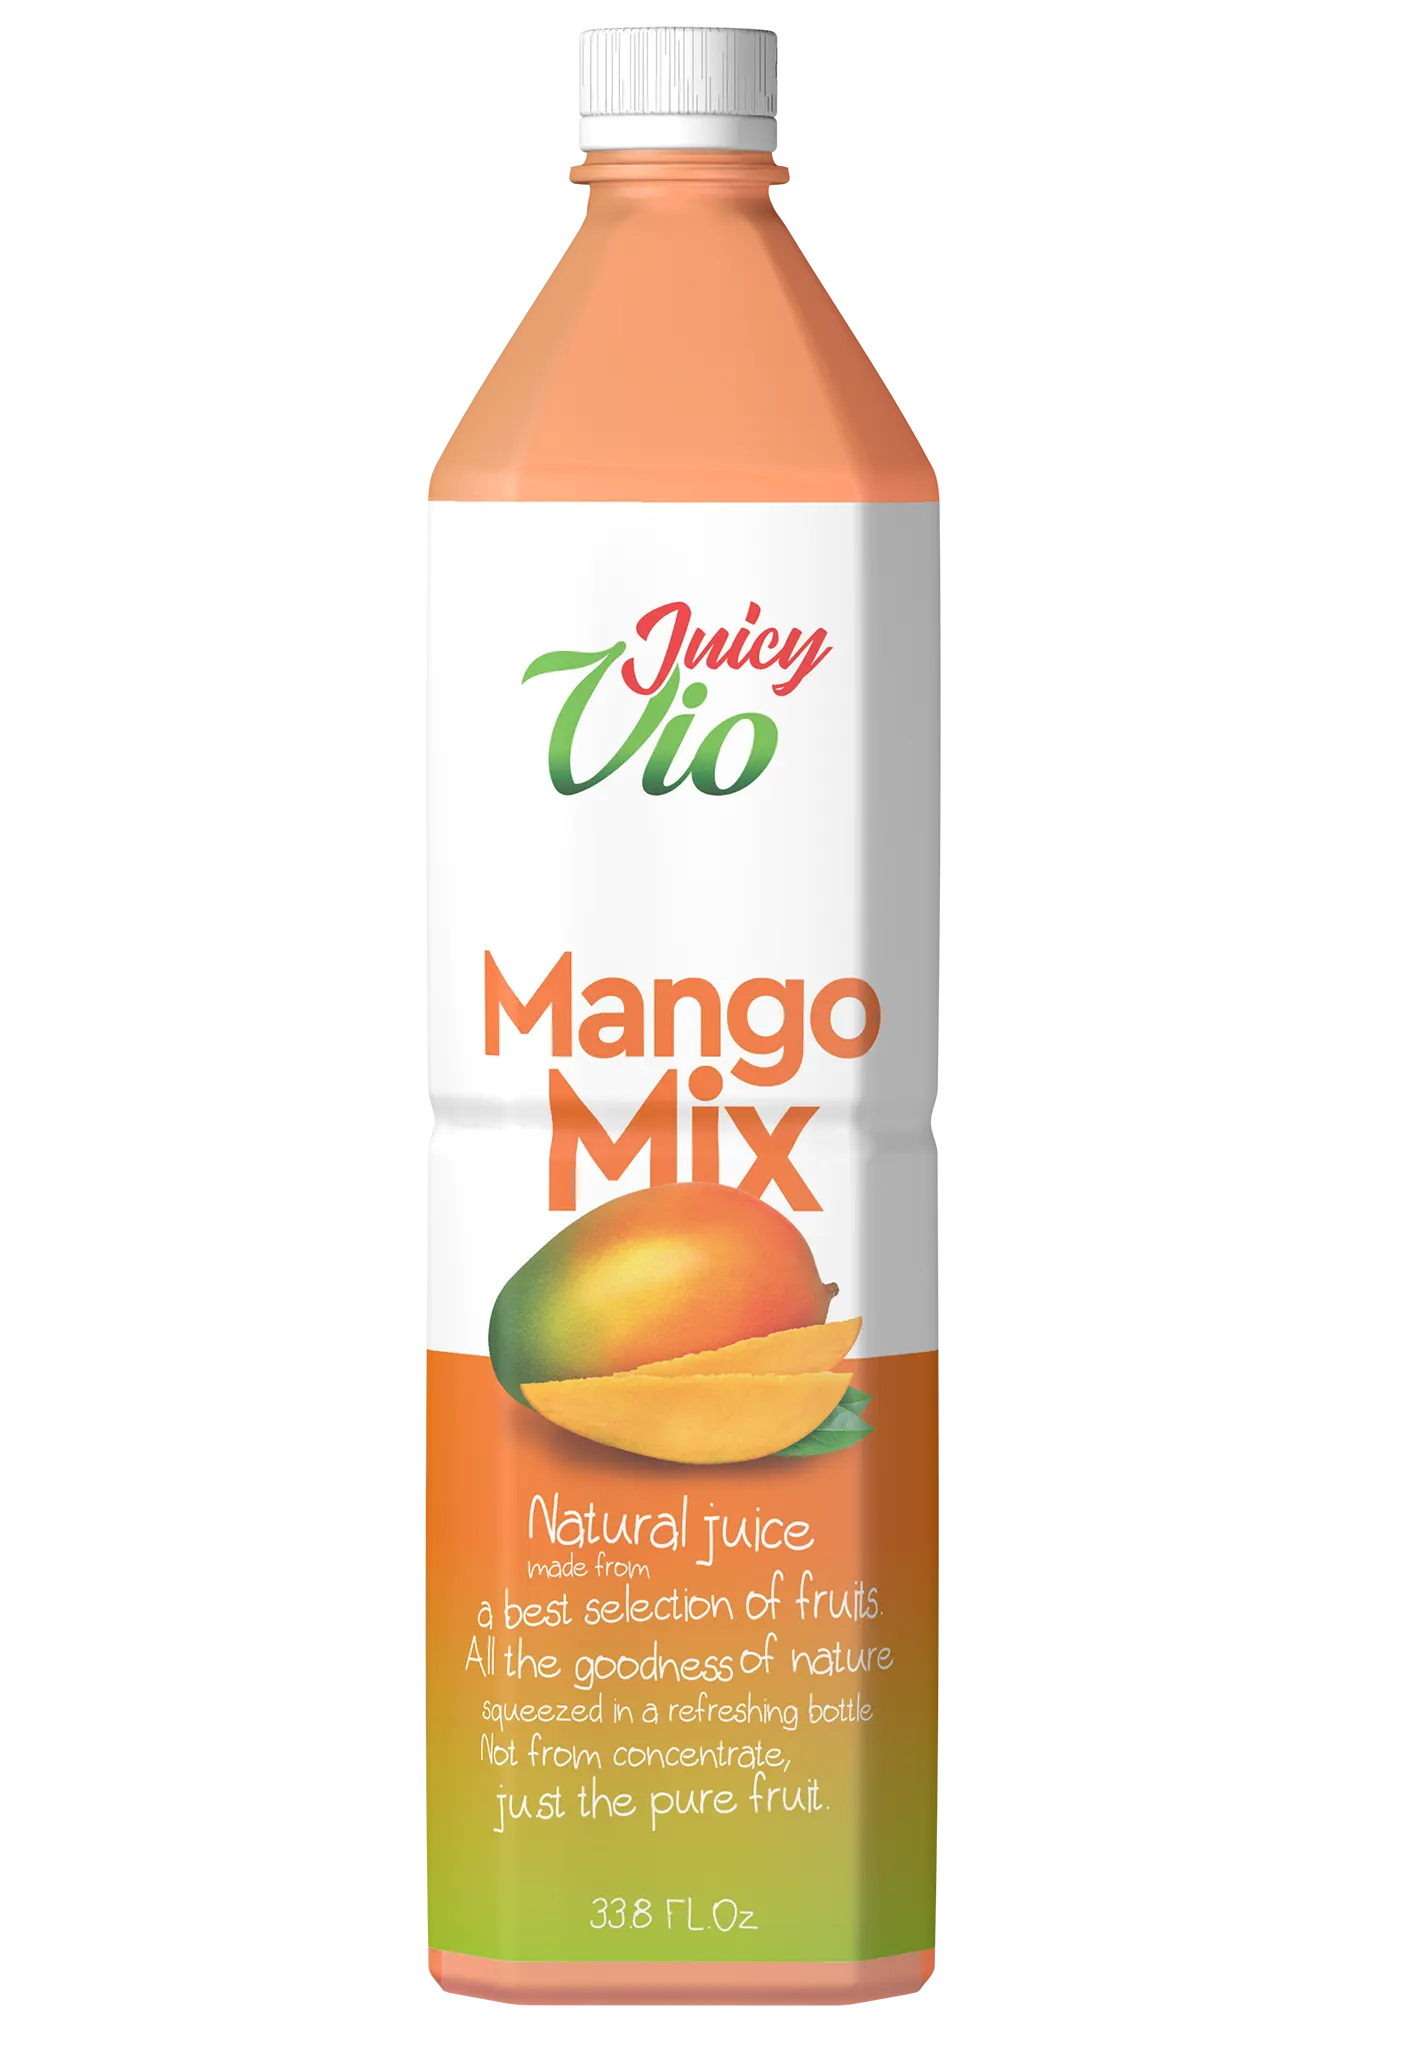 Mango Mix, mango drinks